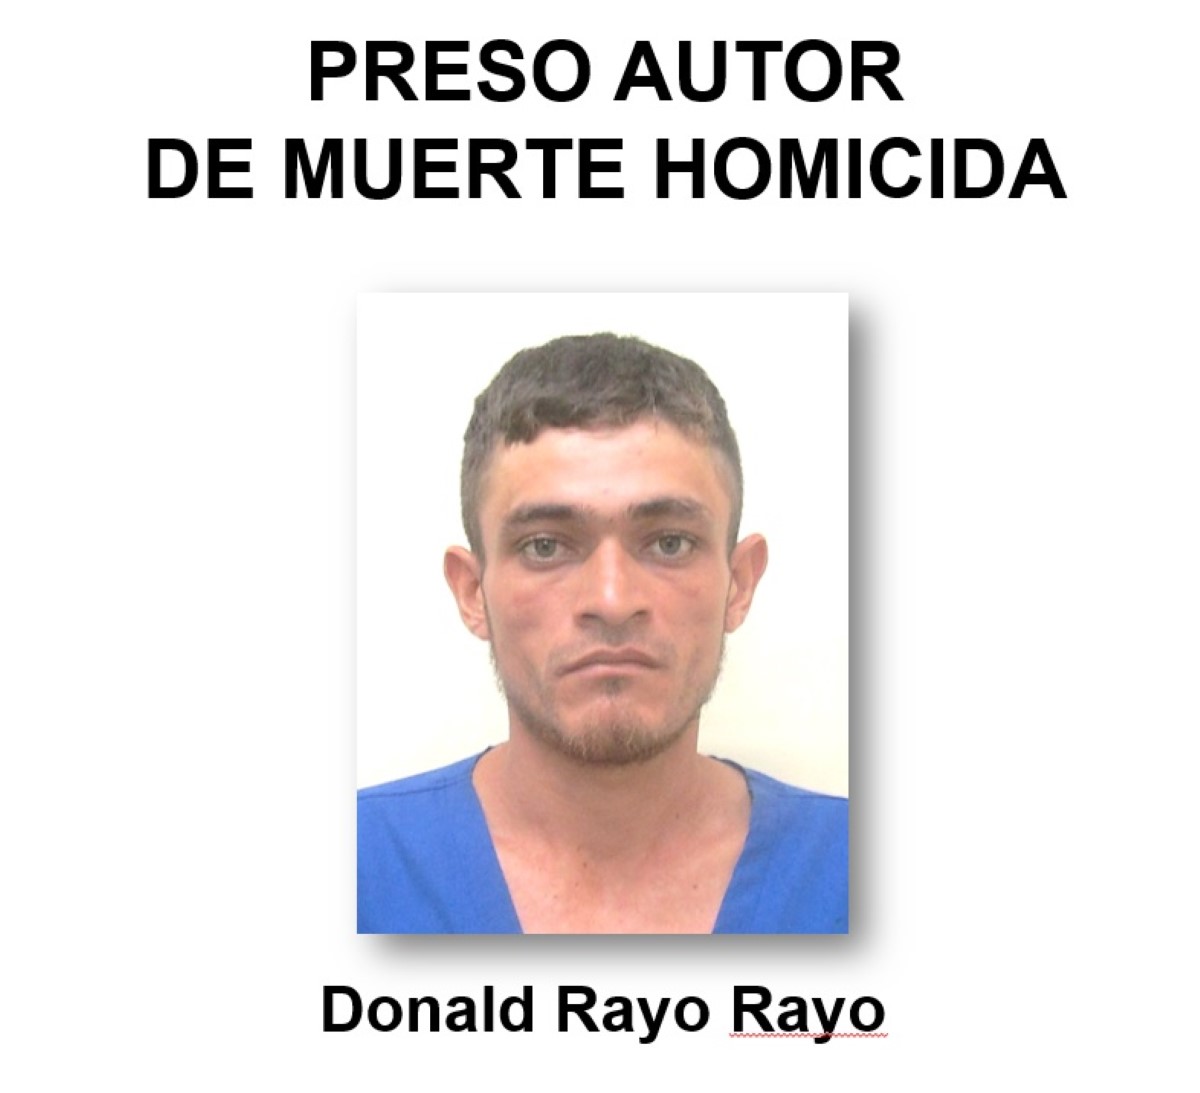 Donald Rayo Rayo, de 24 años